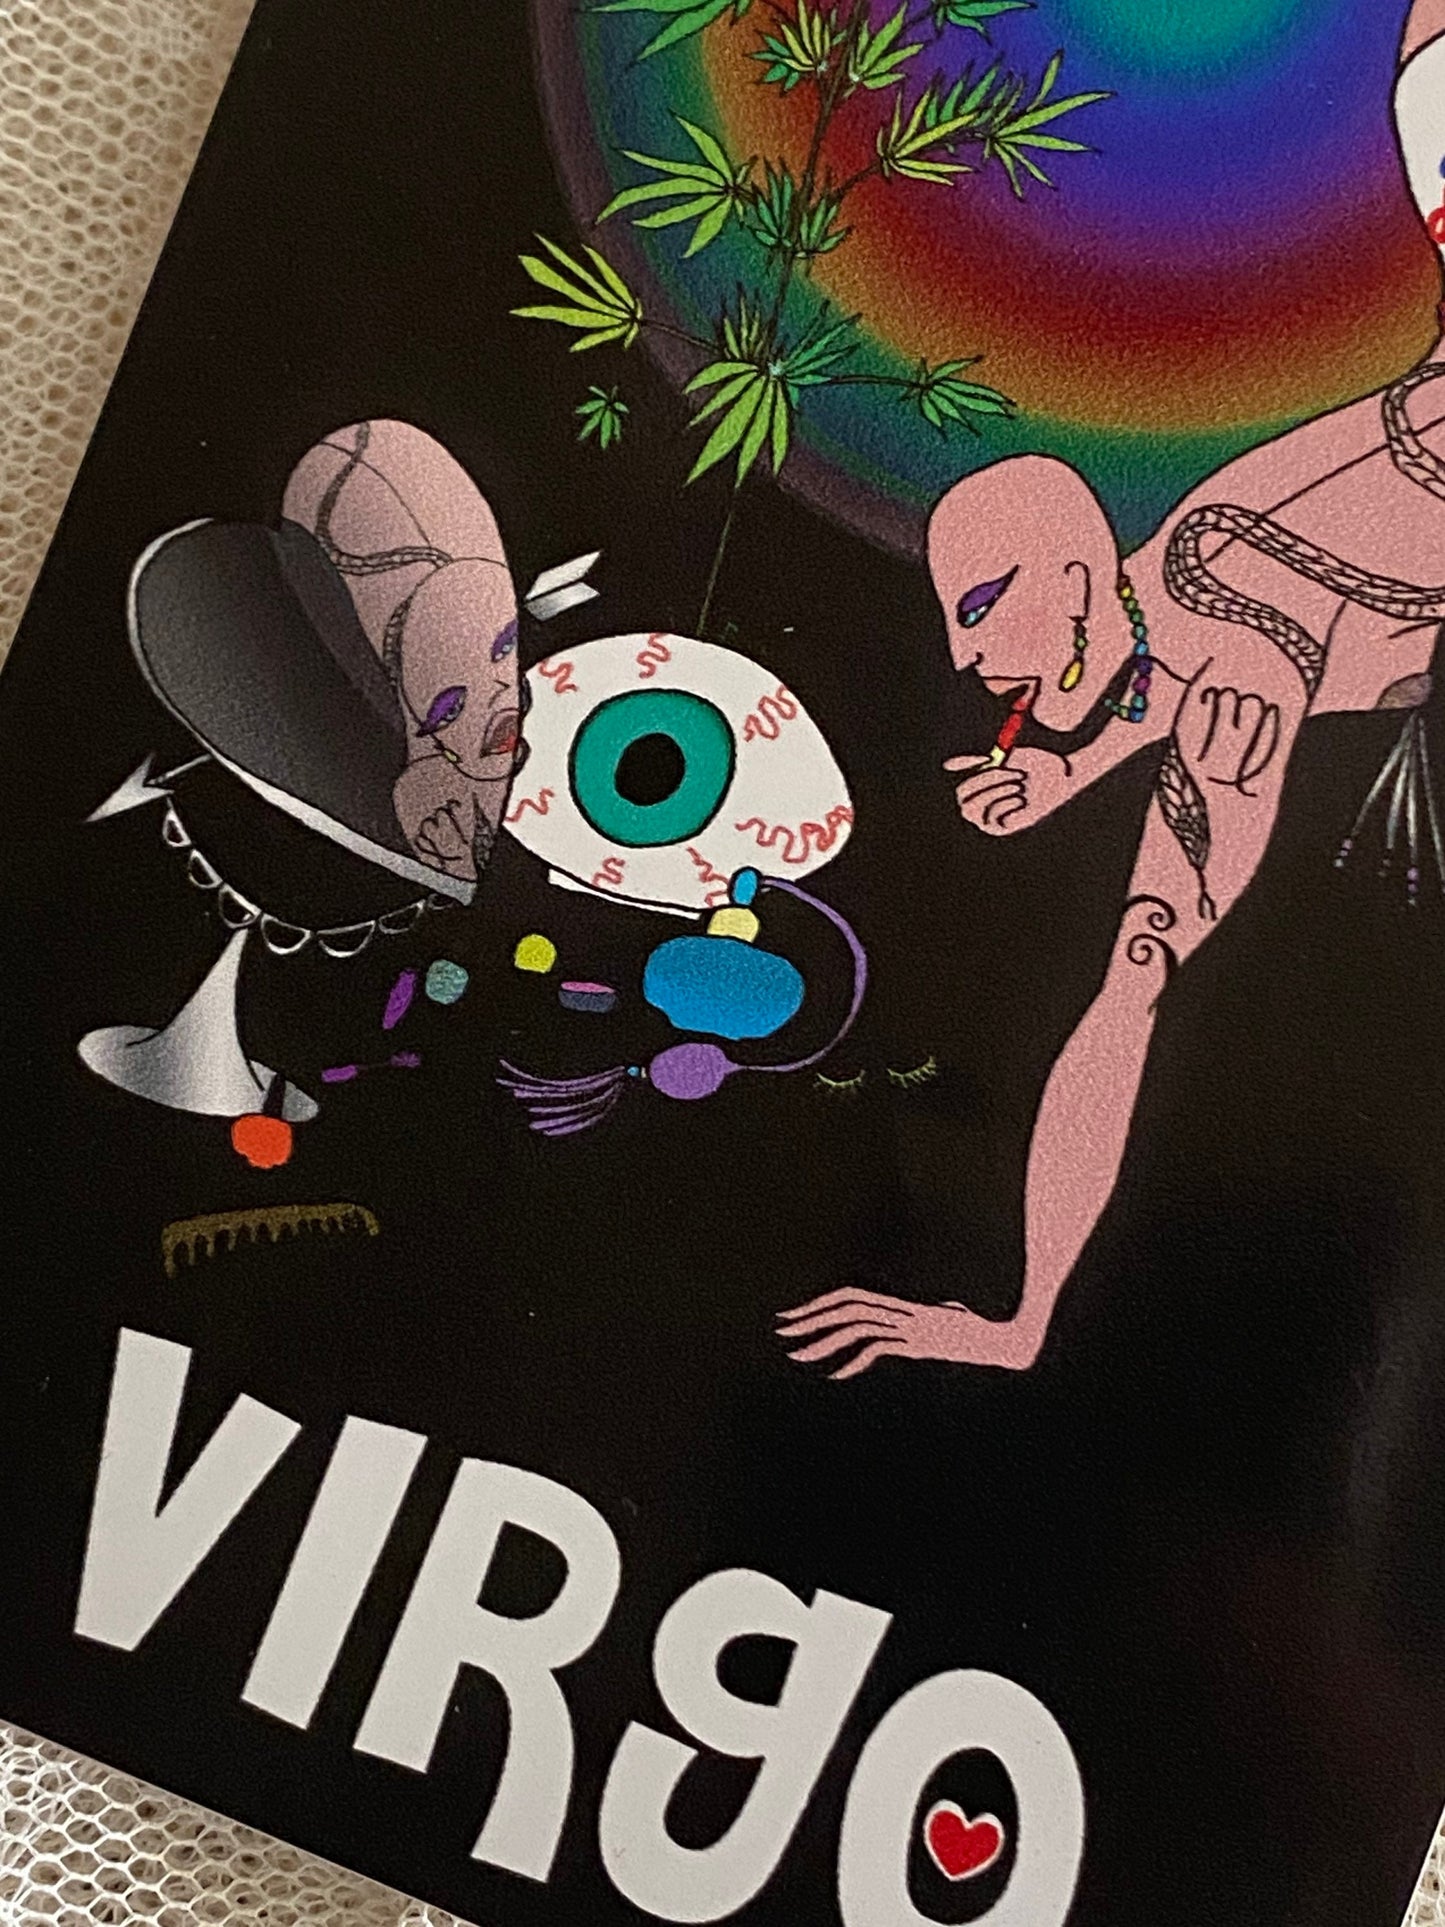 virgo vinyl sticker